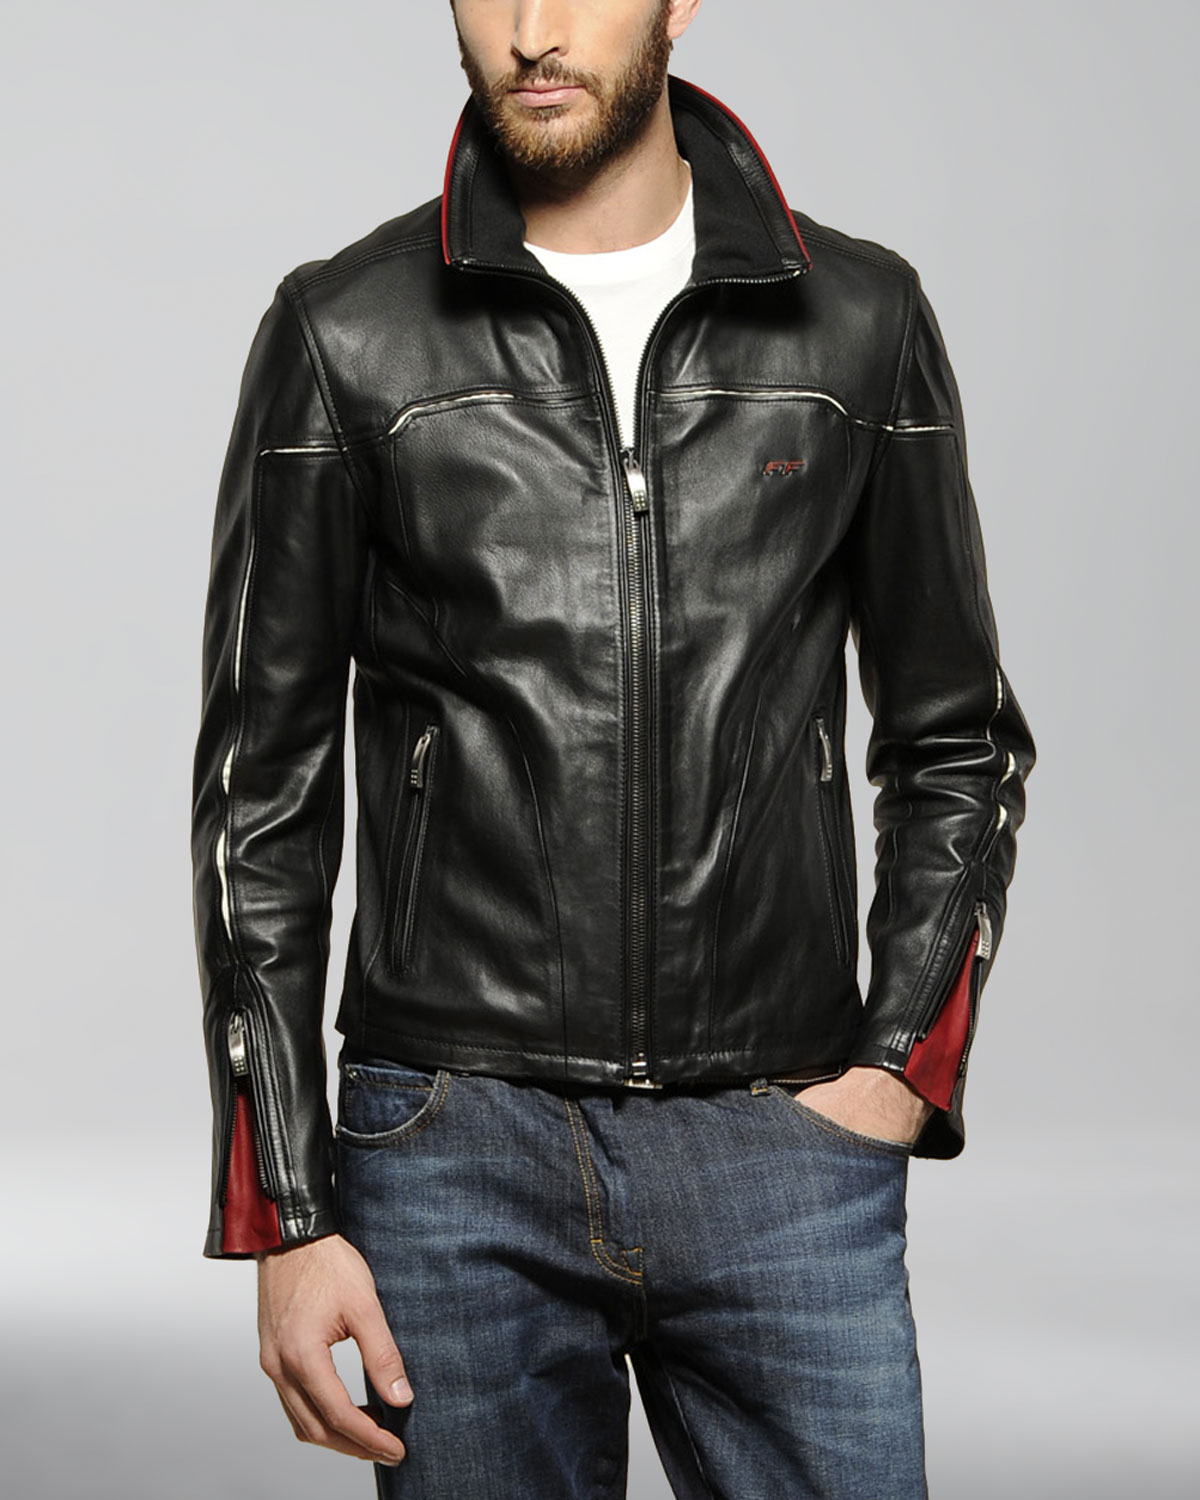 Lyst - Ferrari Leather Jacket in Black for Men